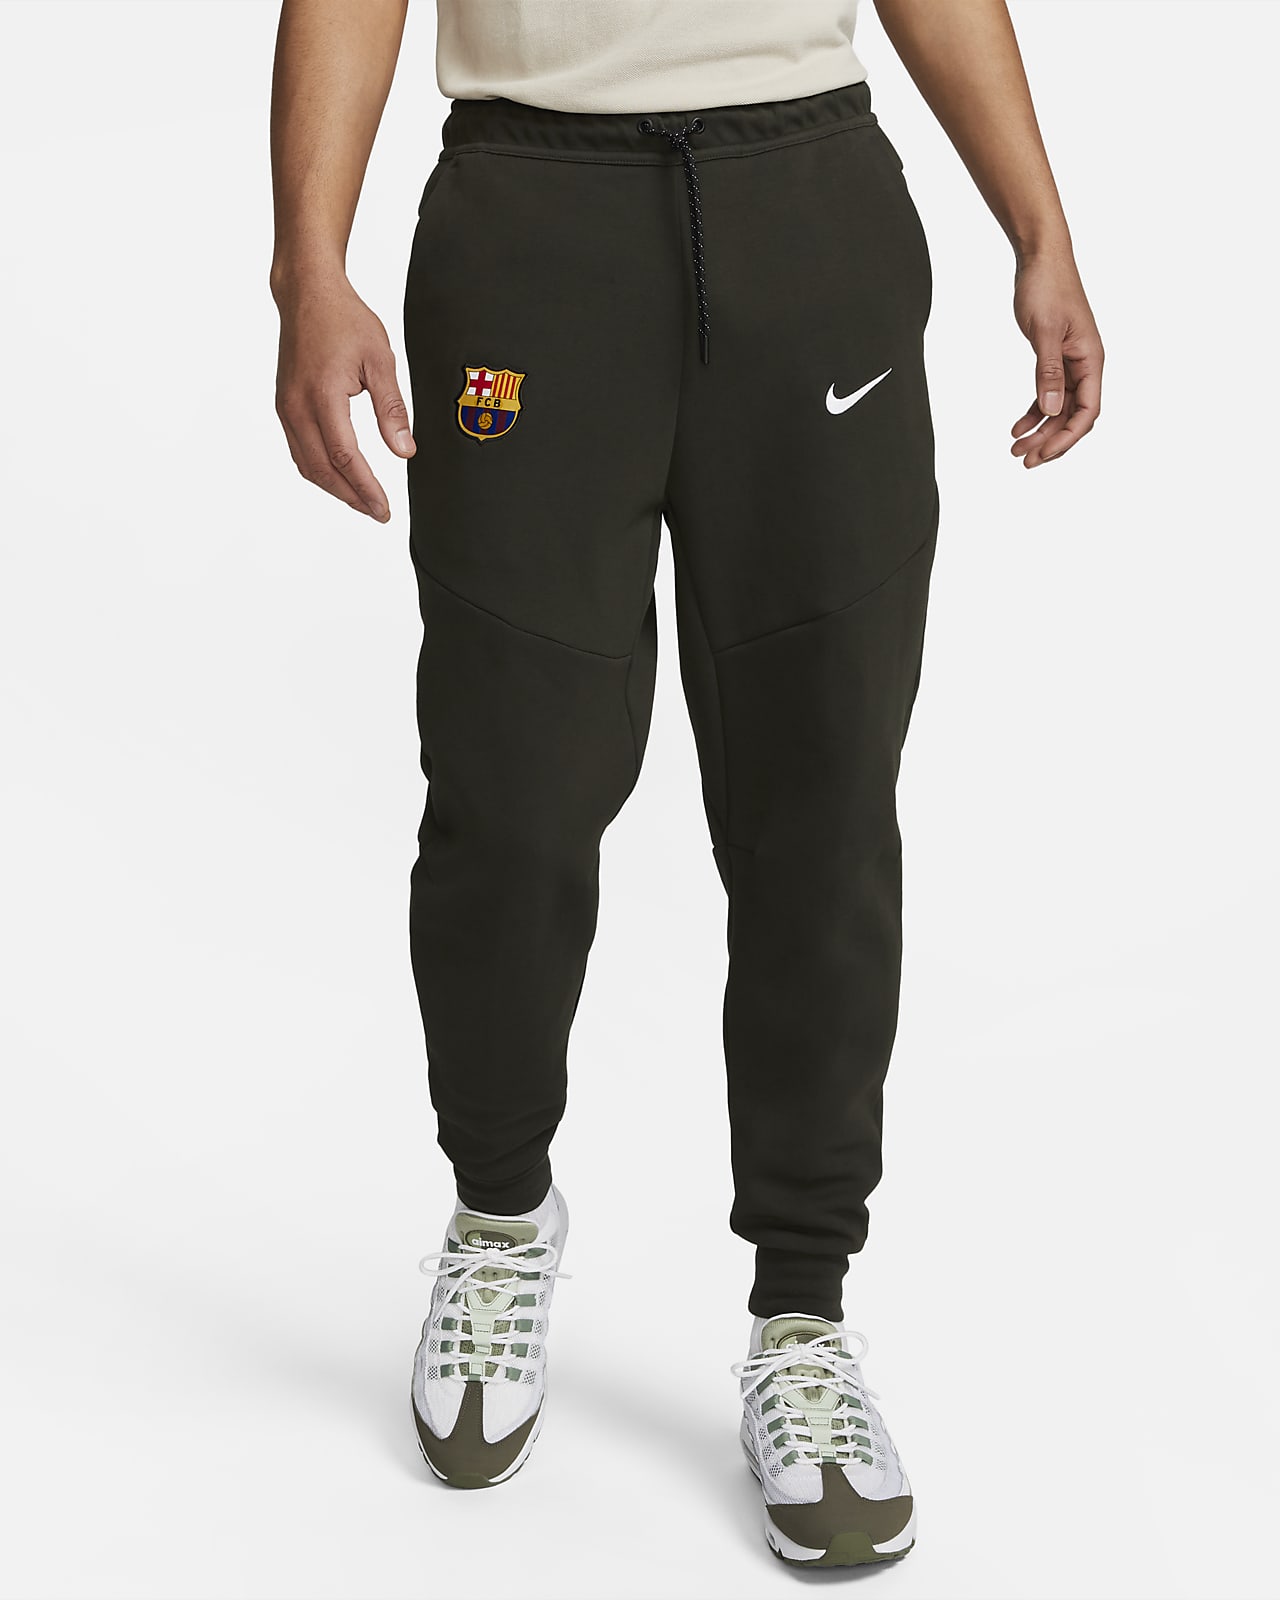 Dalset alto Extranjero F.C. Barcelona Tech Fleece Men's Nike Joggers. Nike LU